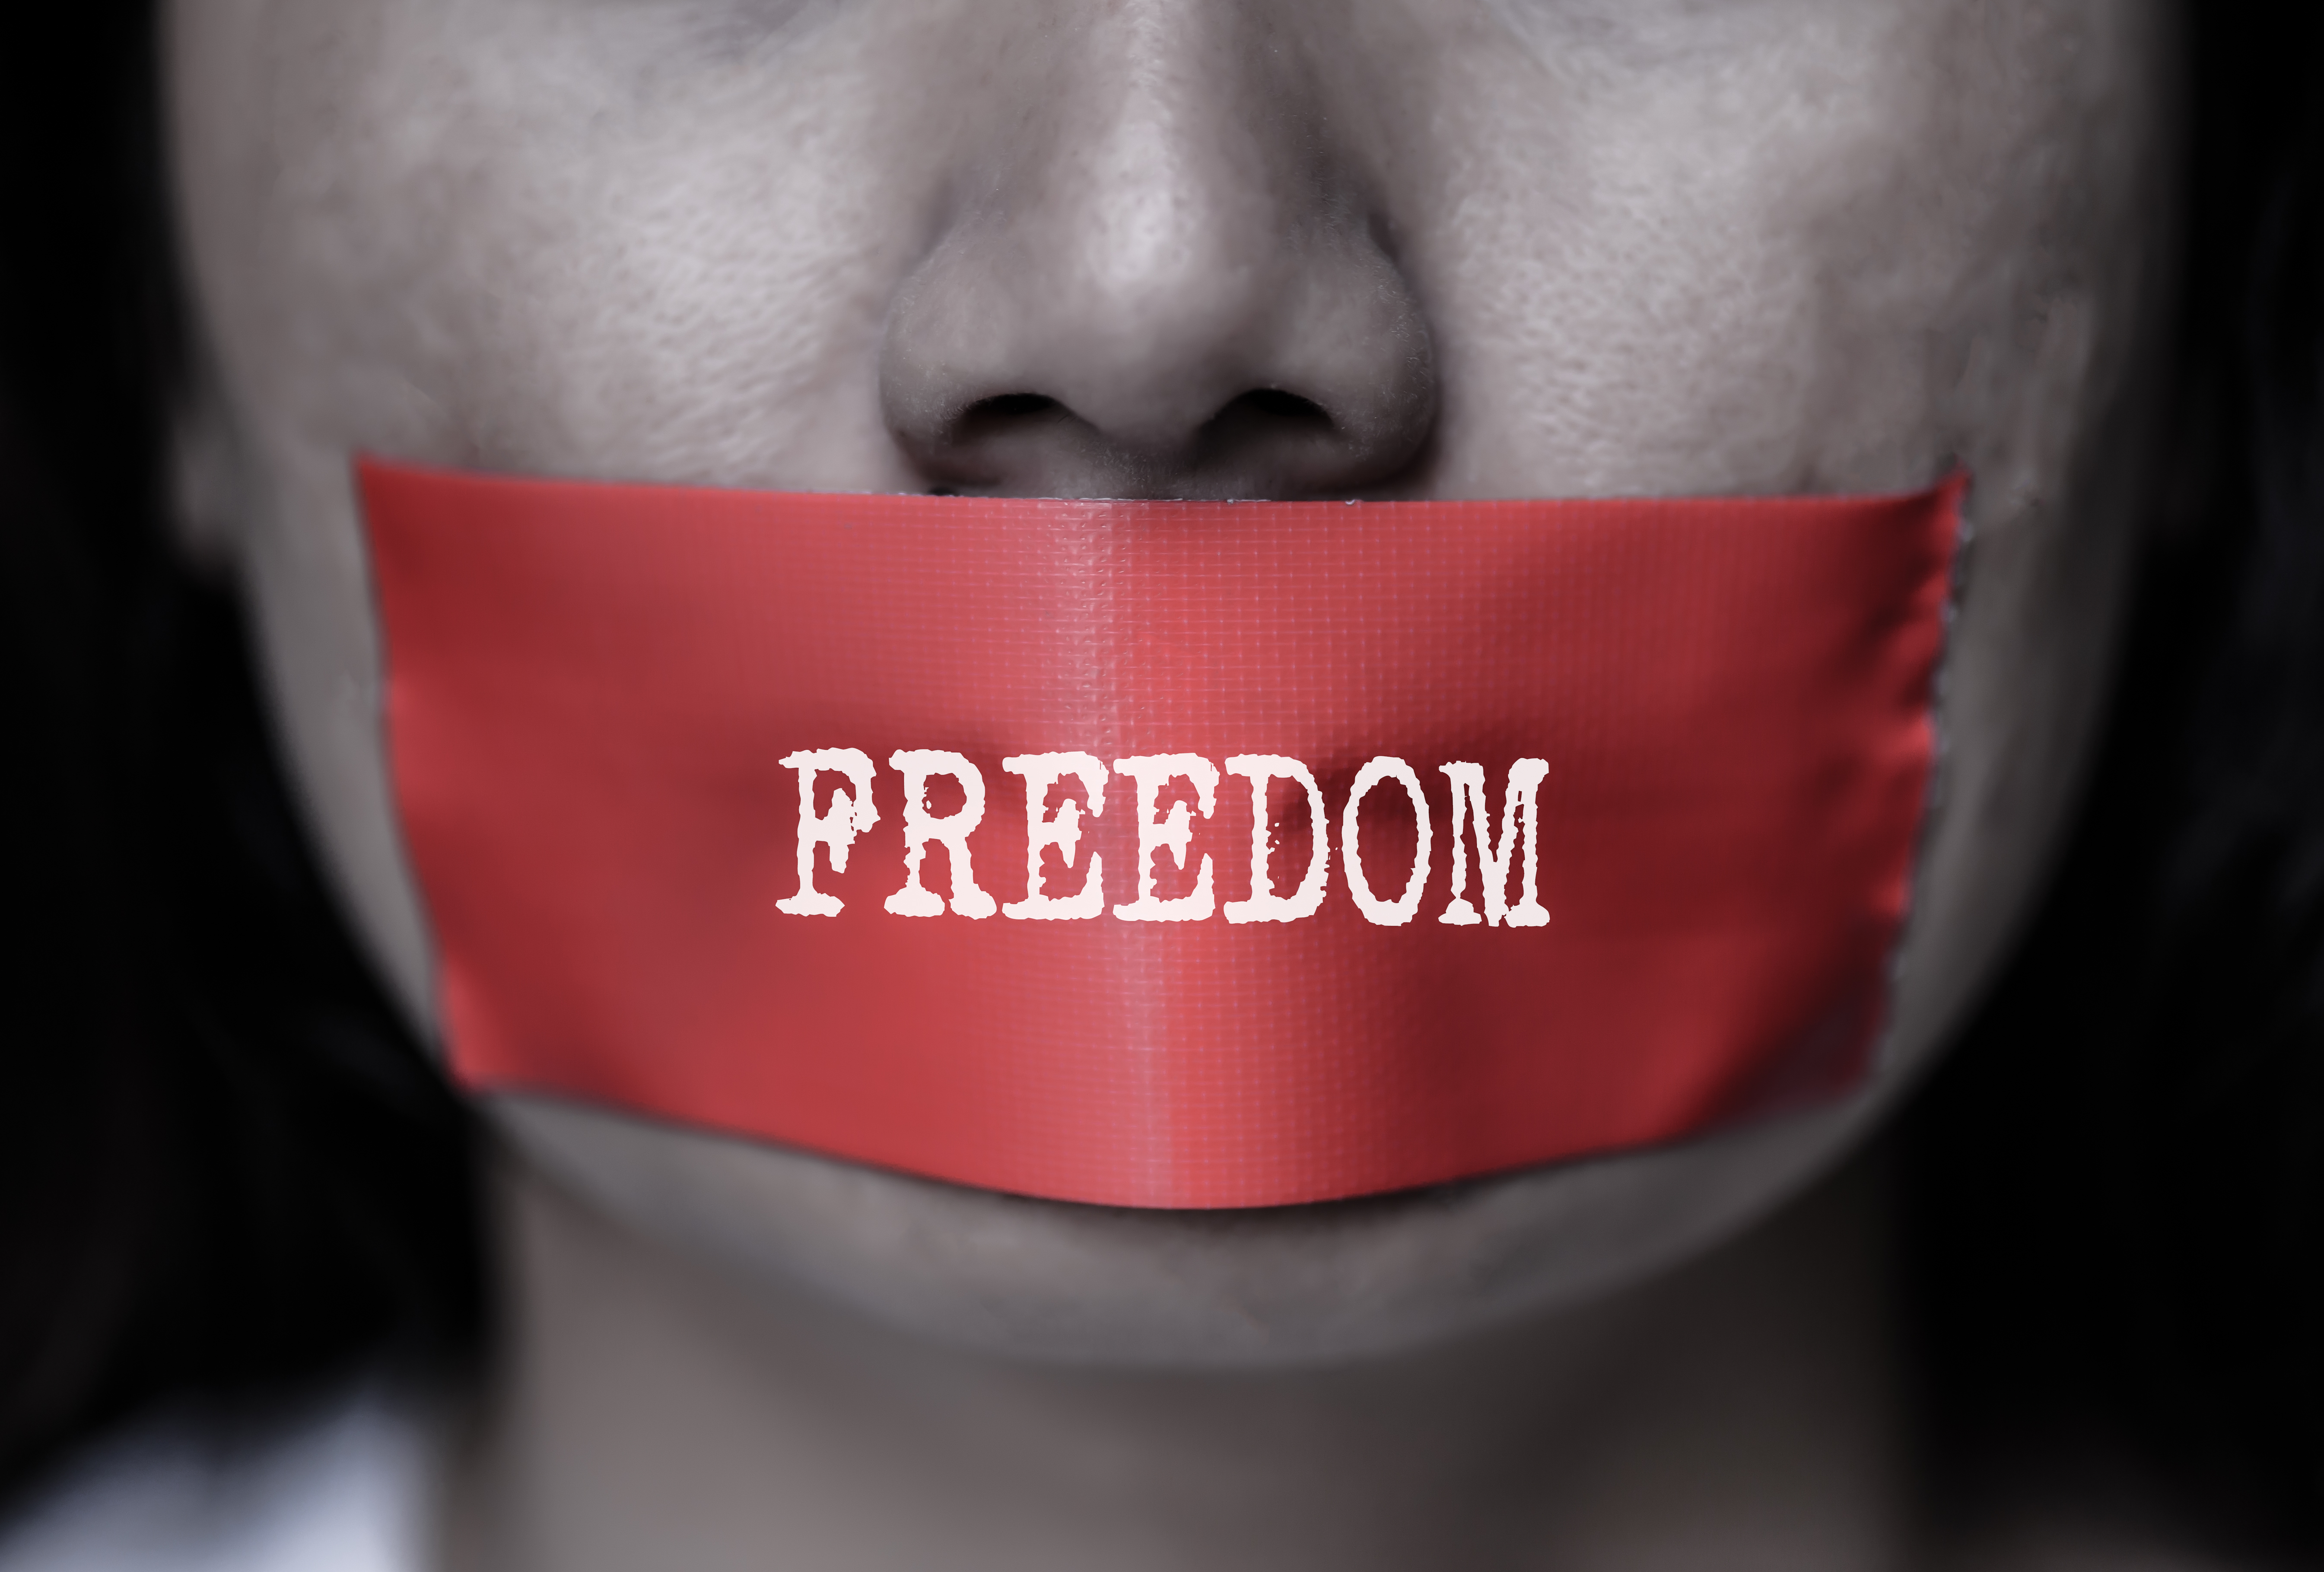 Цензура свободы слова